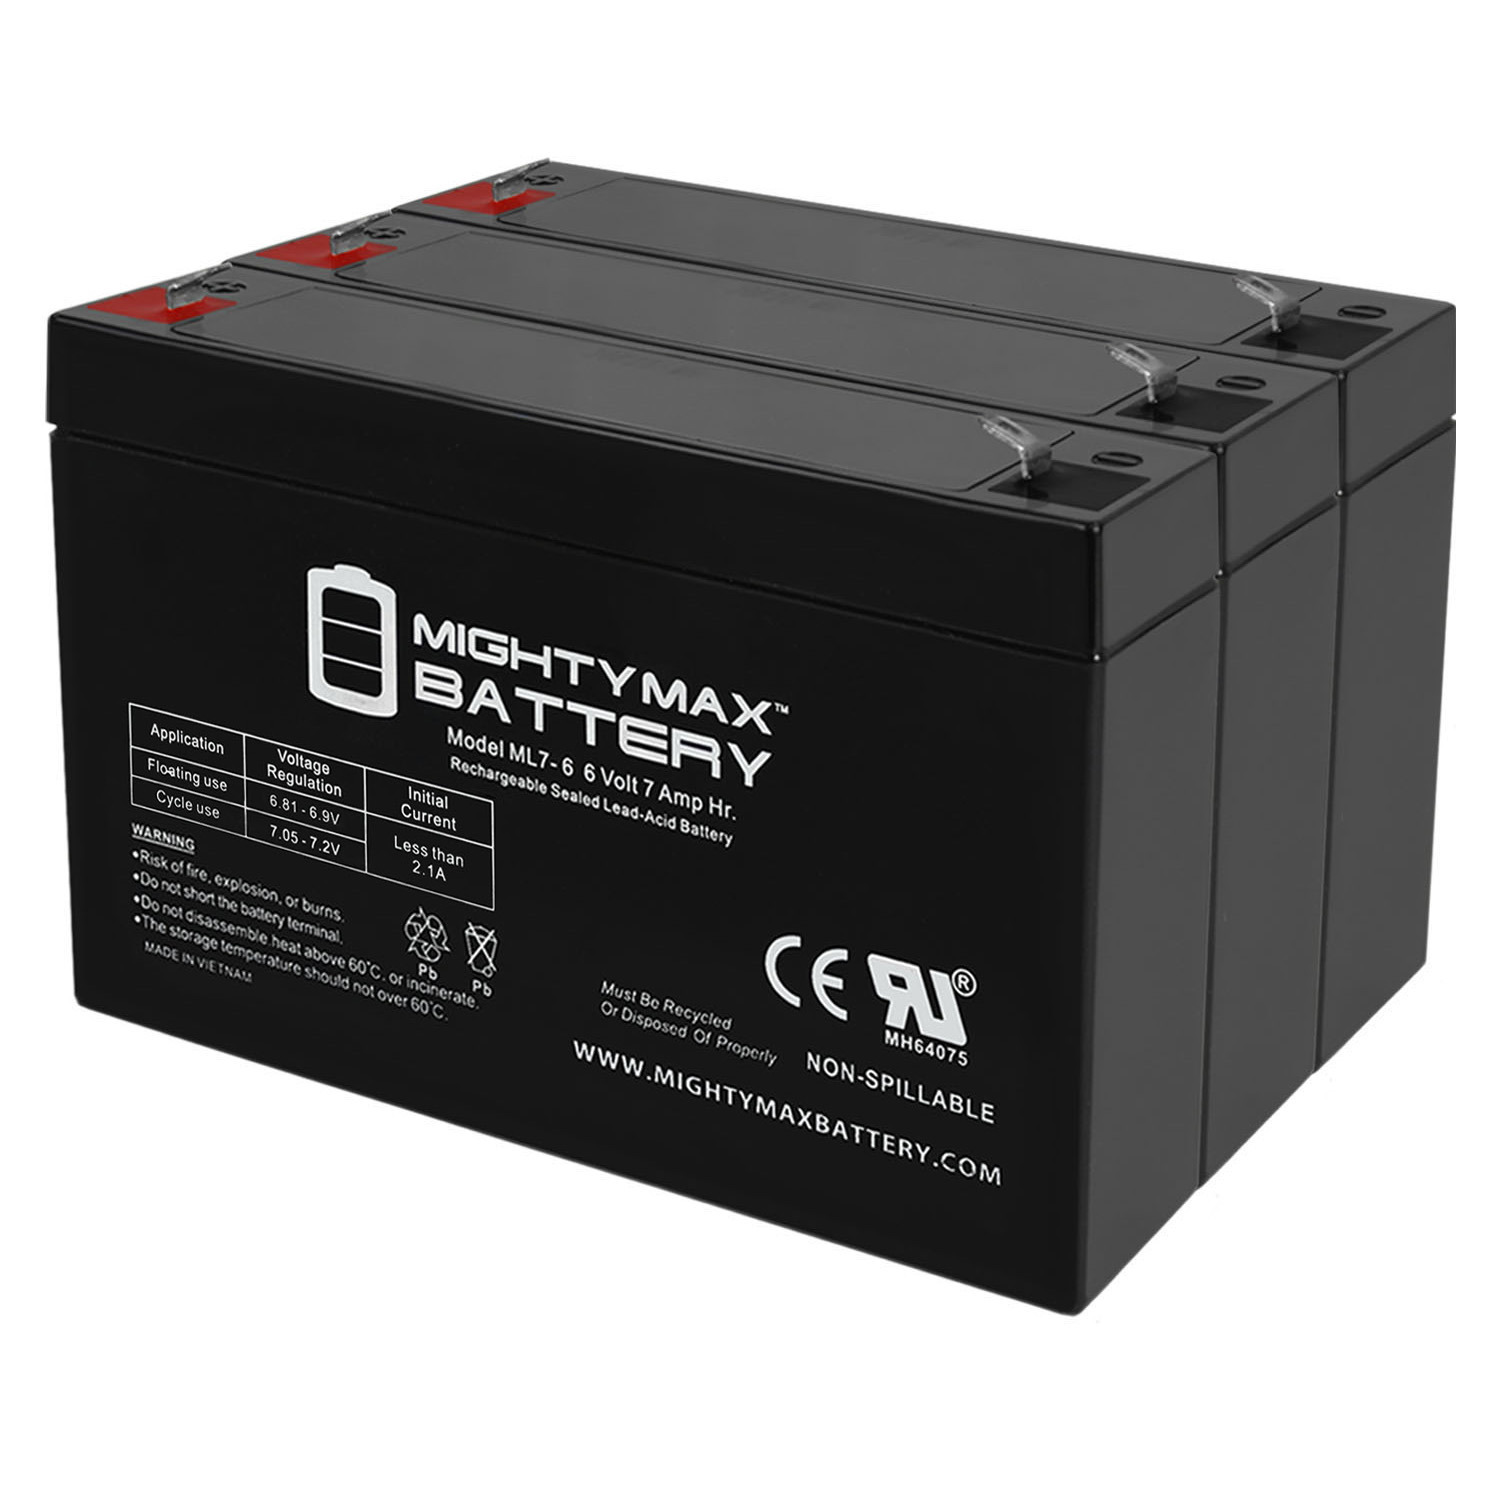 6V 7Ah UPS Battery for Alexander G670 - 3 Pack